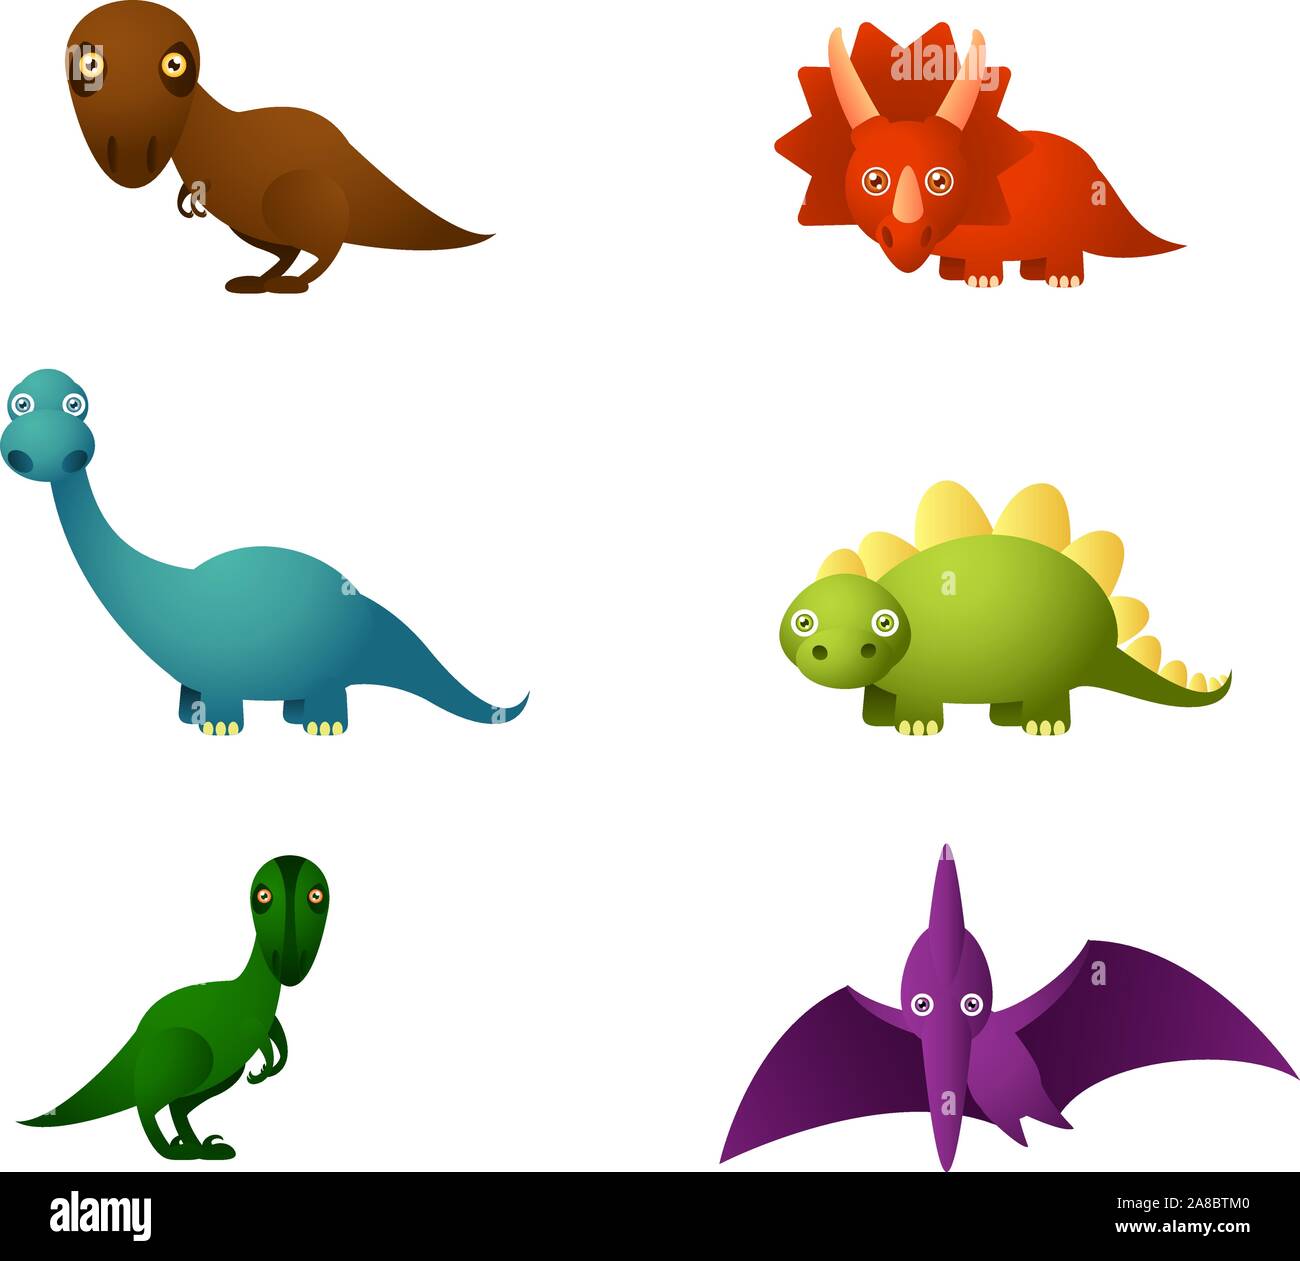 Sechs Cartoon dinosaur, mit sechs verschiedenen Dinosaurier in verschiedenen Farben: Braun, Rot Dinosaurier Dinosaurier Dinosaurier, blau, grün und violett Dinosaurier di Stock Vektor